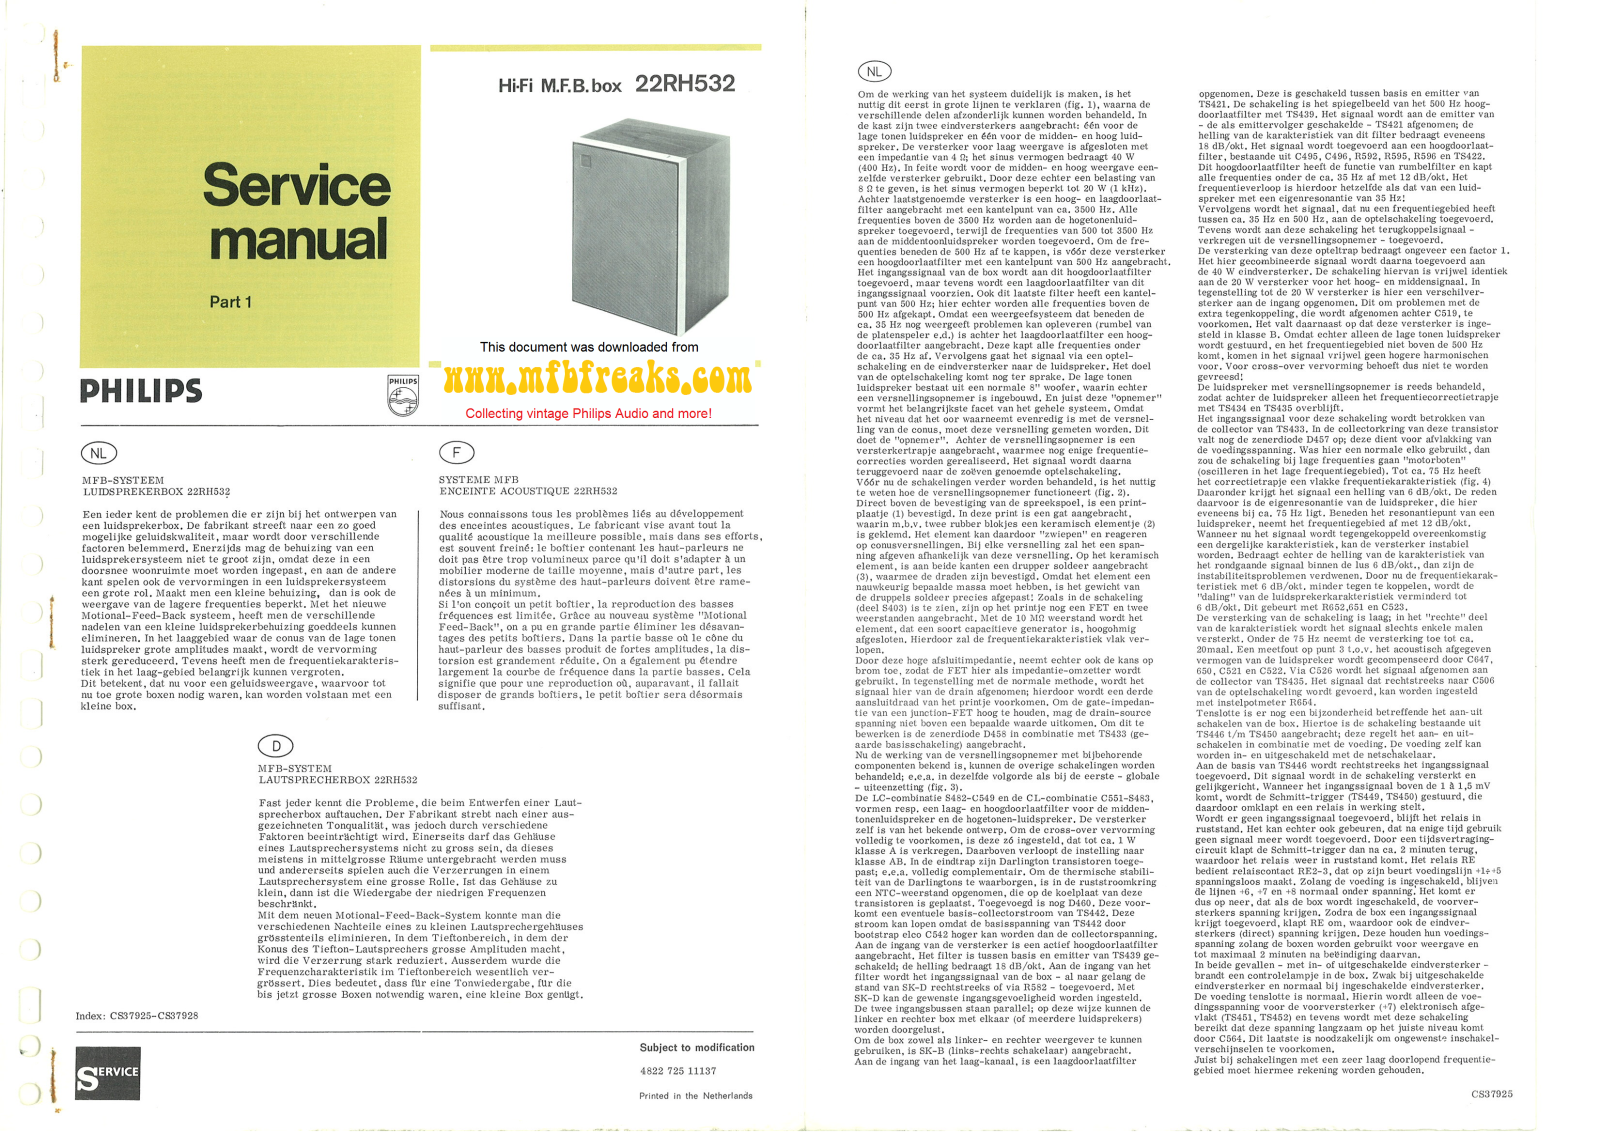 philips 22RH532 Service Manual